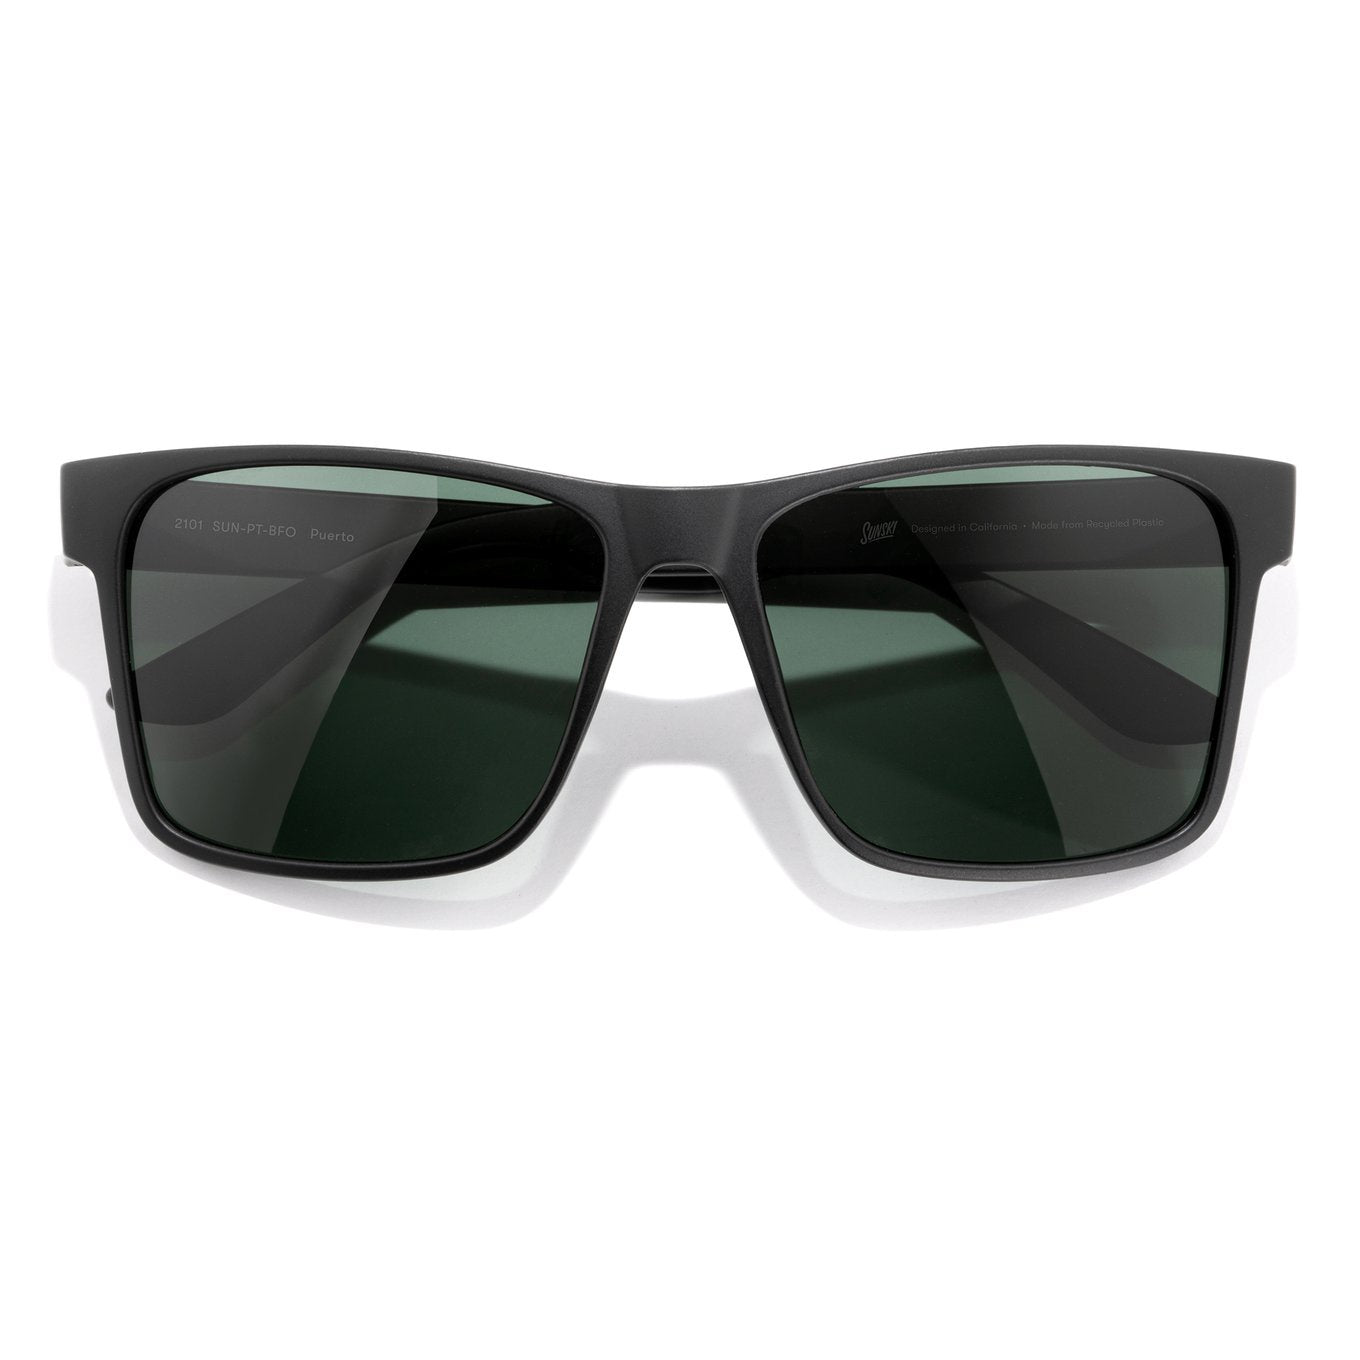 SUNSKI Sunglasses - Puerto Black Forest